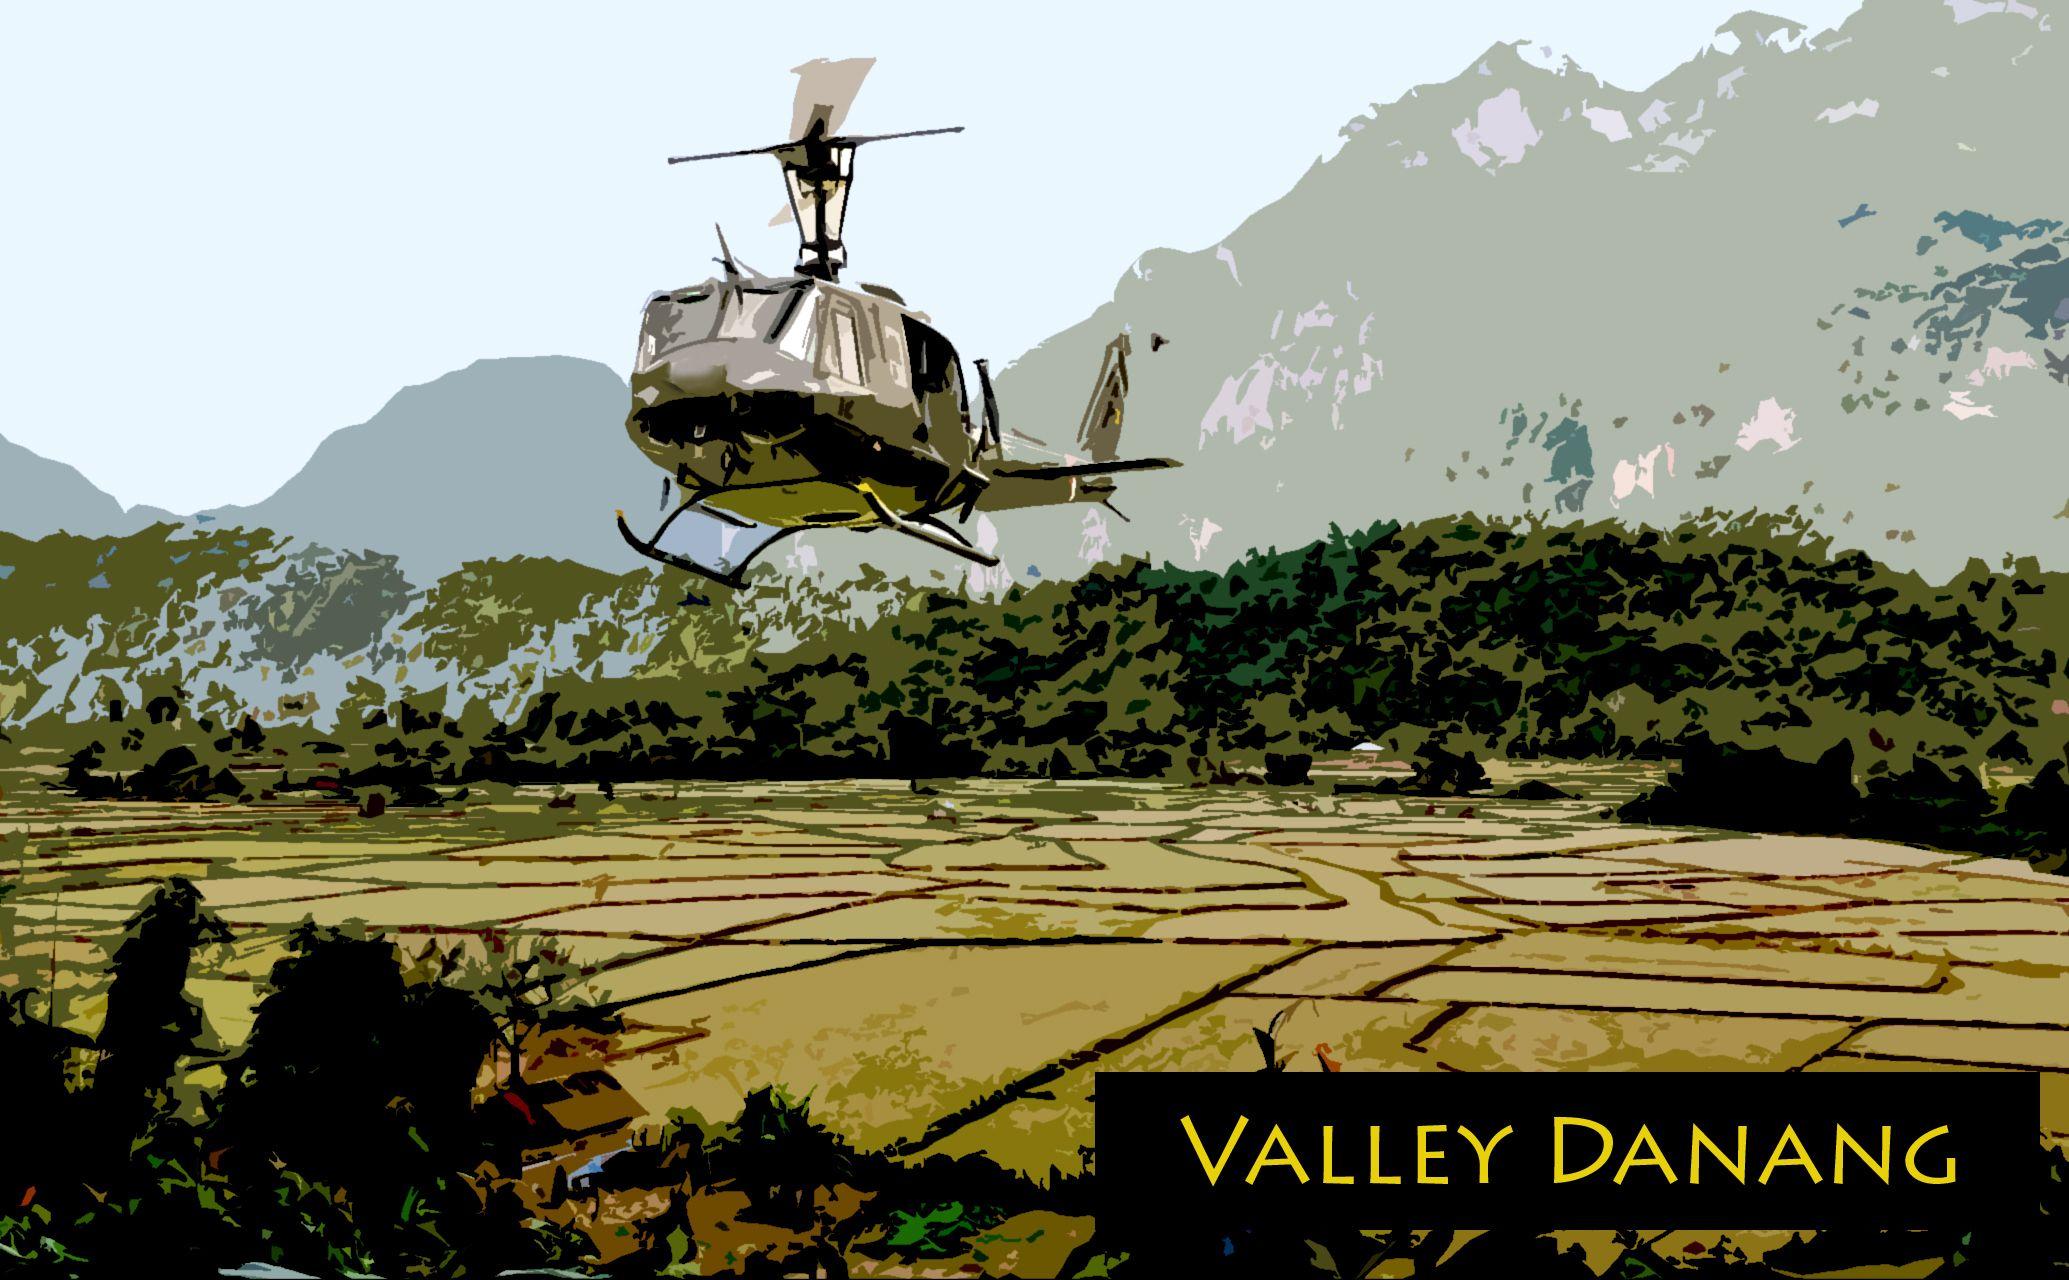 Danang Valley